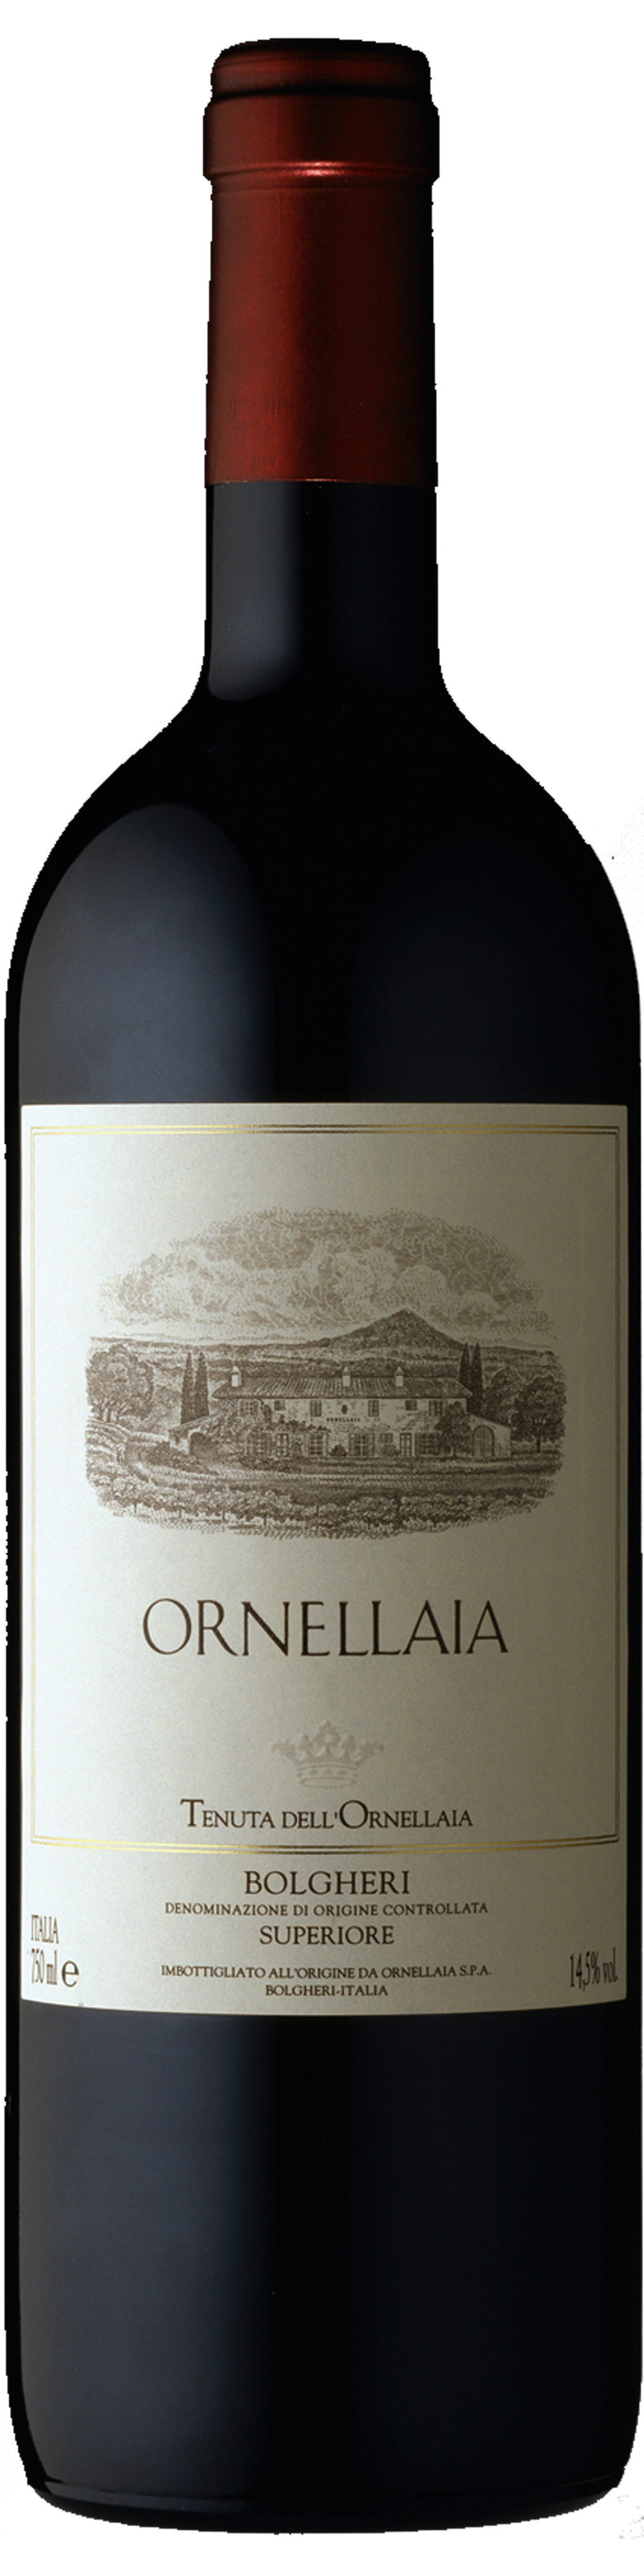 Bottle shot of 1996 Ornellaia